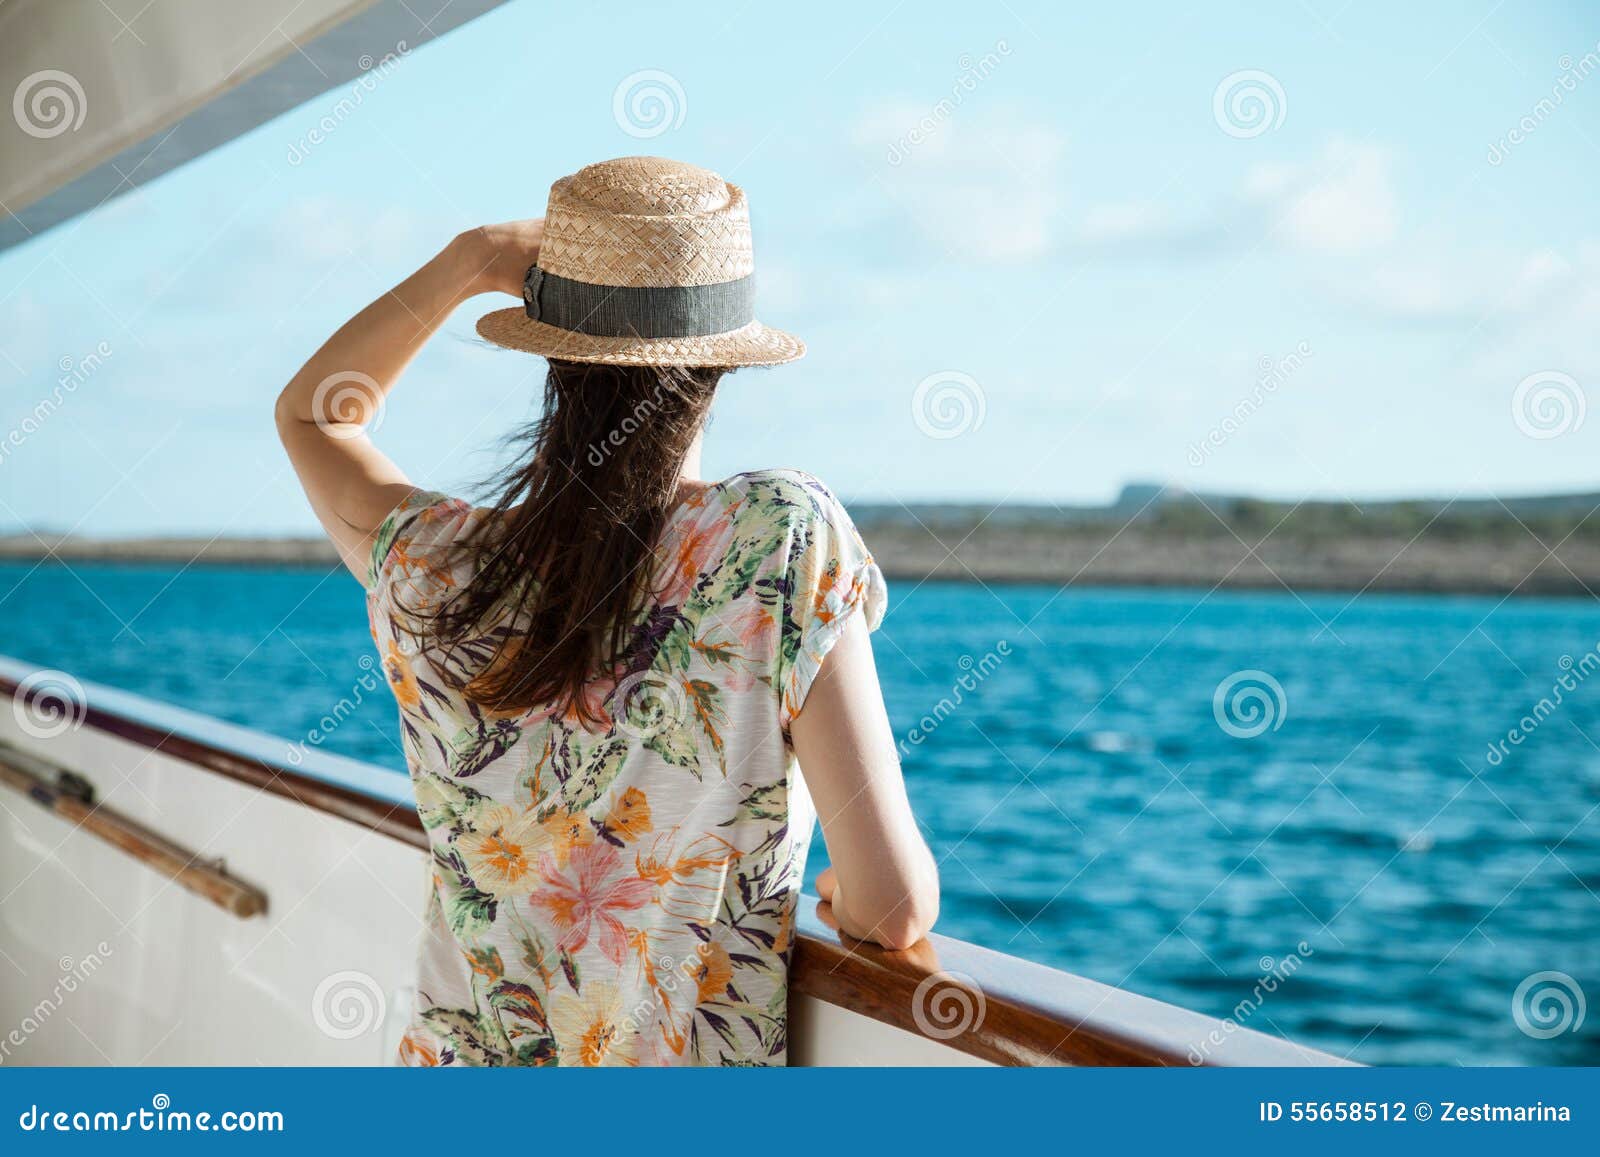 Лежа на палубе. Итальянка на корабле. Девушка на палубе лайнера. Картина девушка на палубе лайнера. Девушка сидит на борту корабля.